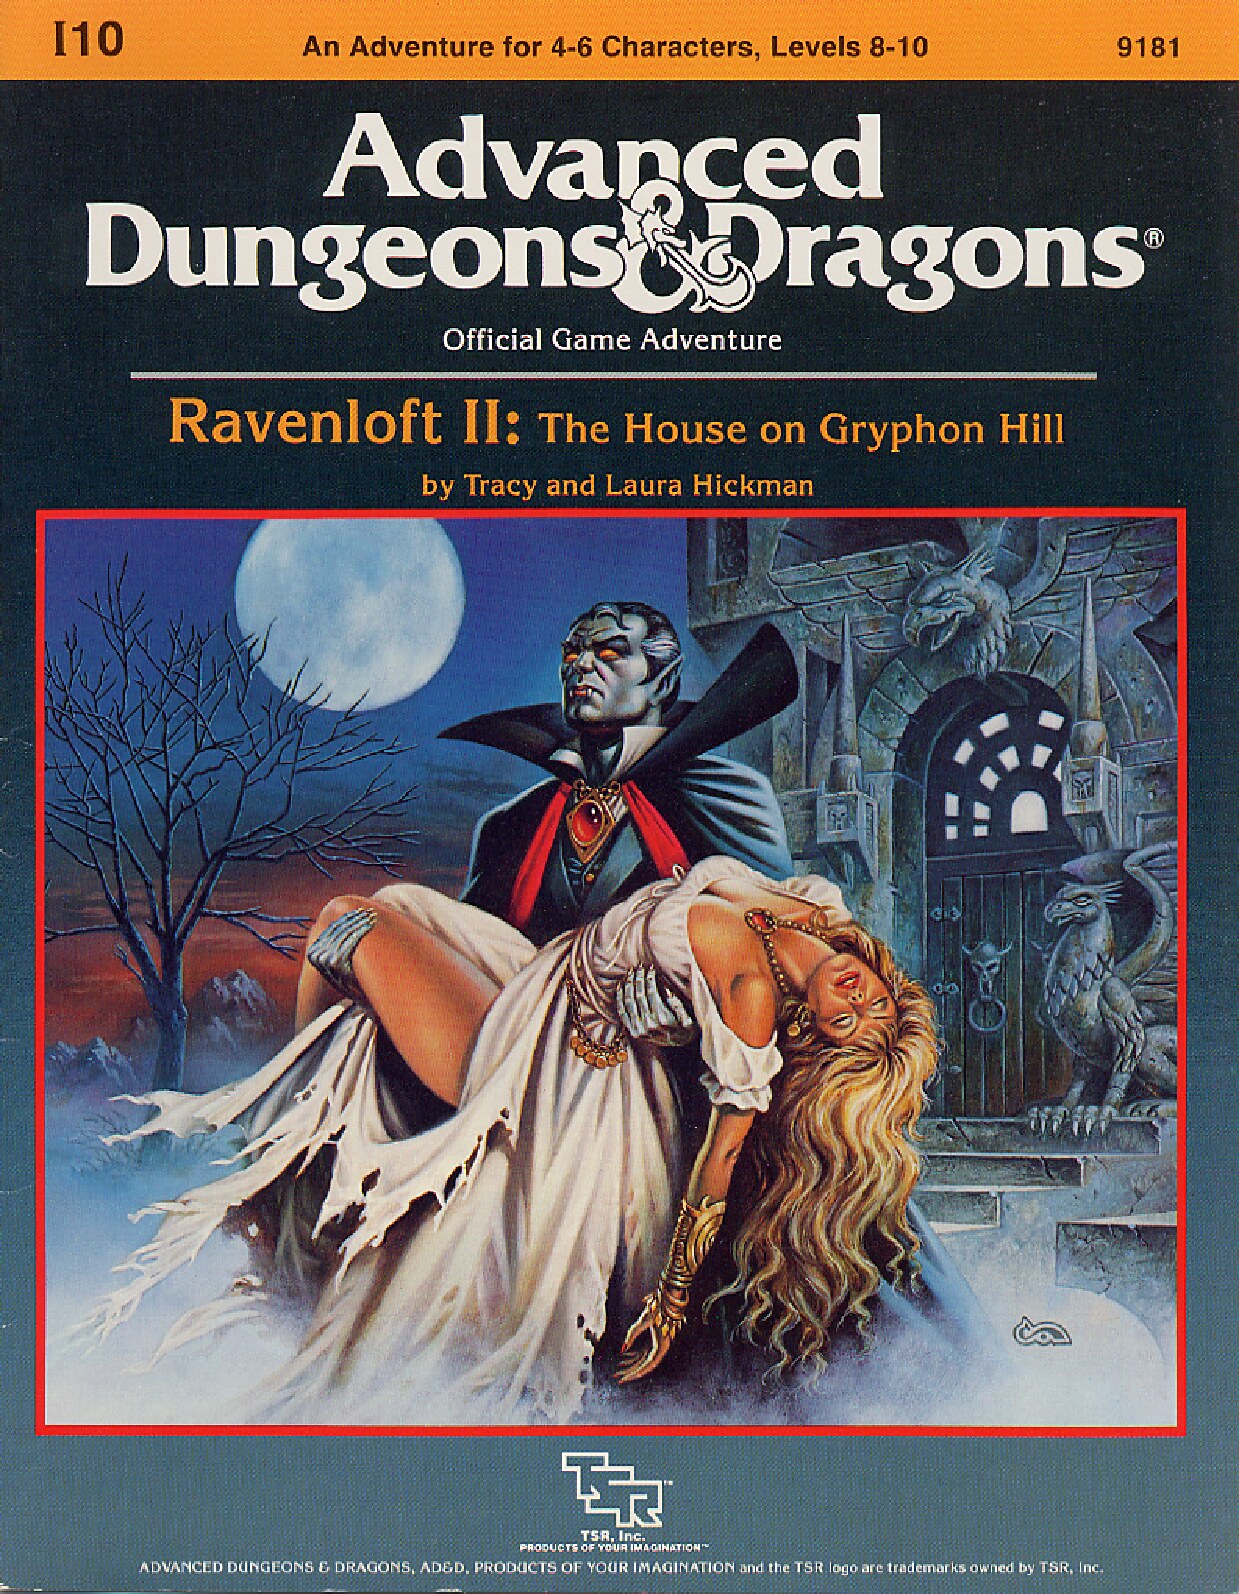 Ravenloft II: The House on Gryphon Hill